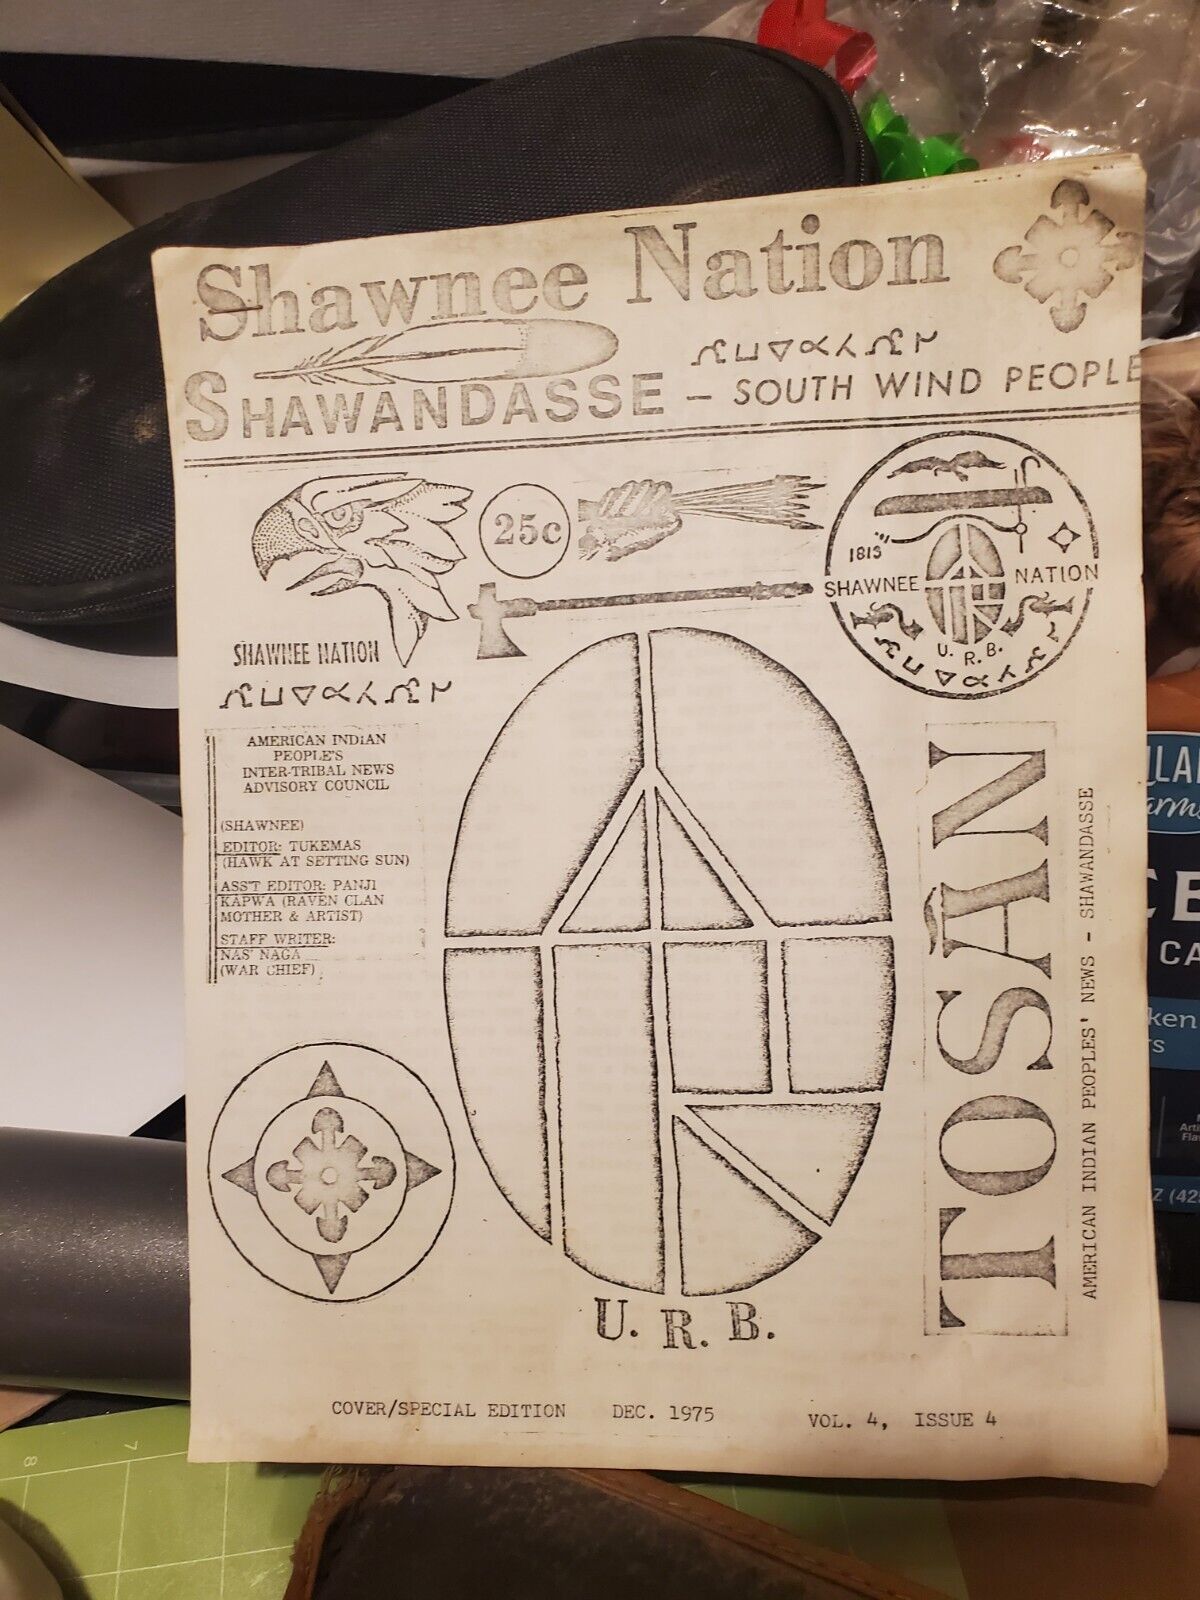 American Indian Peoples' News SHAWANDASSE Shawnee Nation Dec 1975